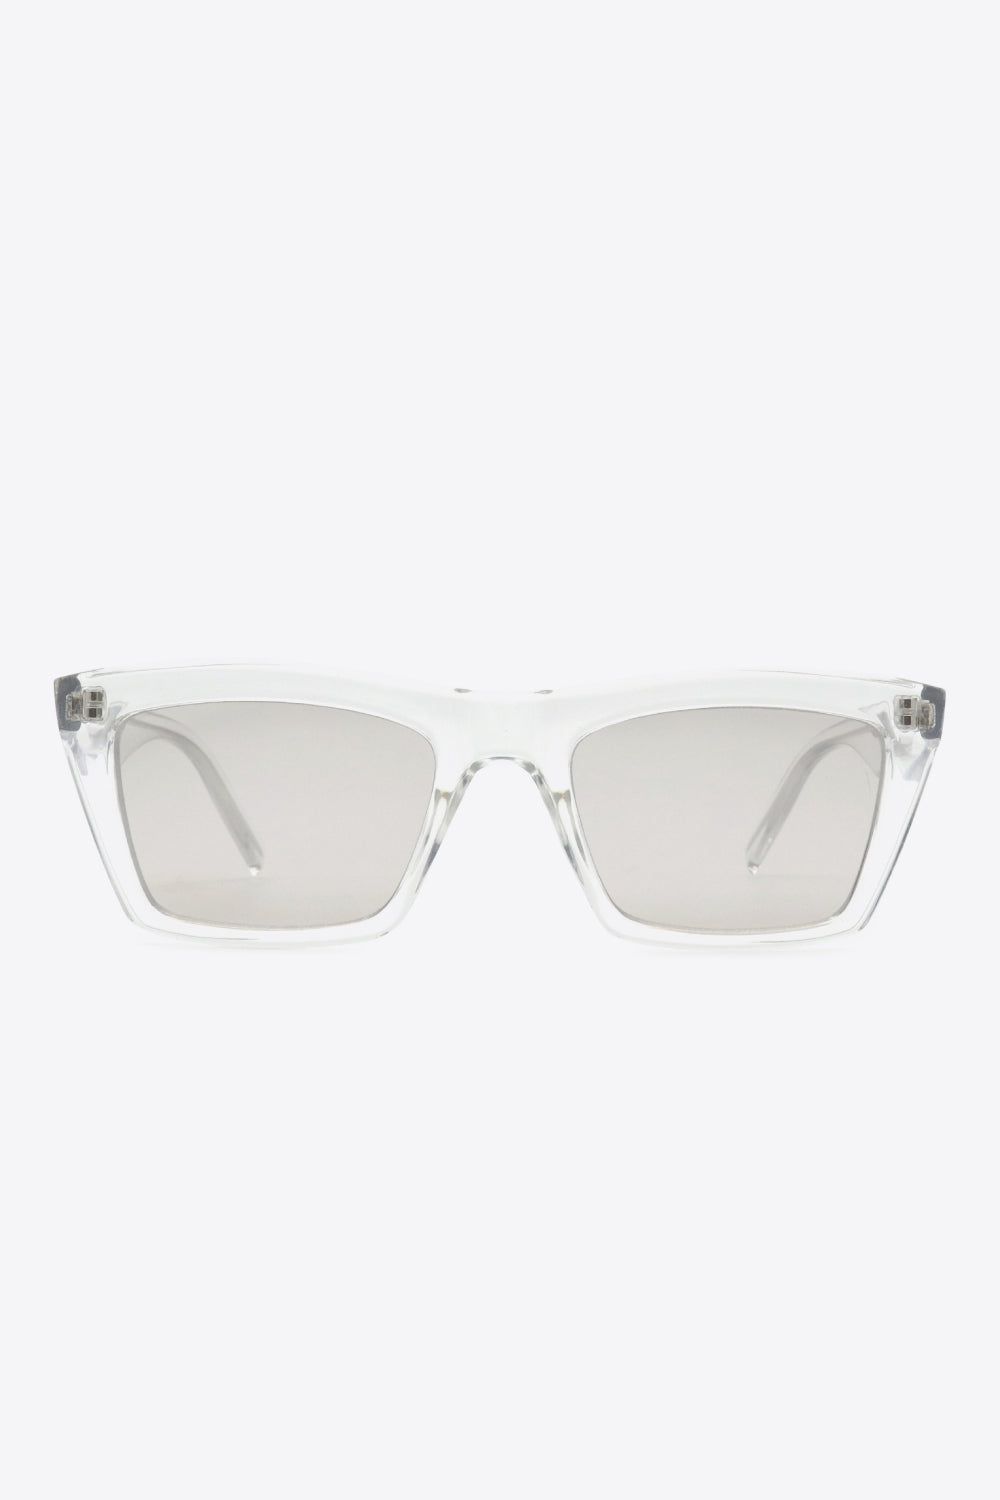 Cellulose Propionate Frame Rectangle Sunglasses